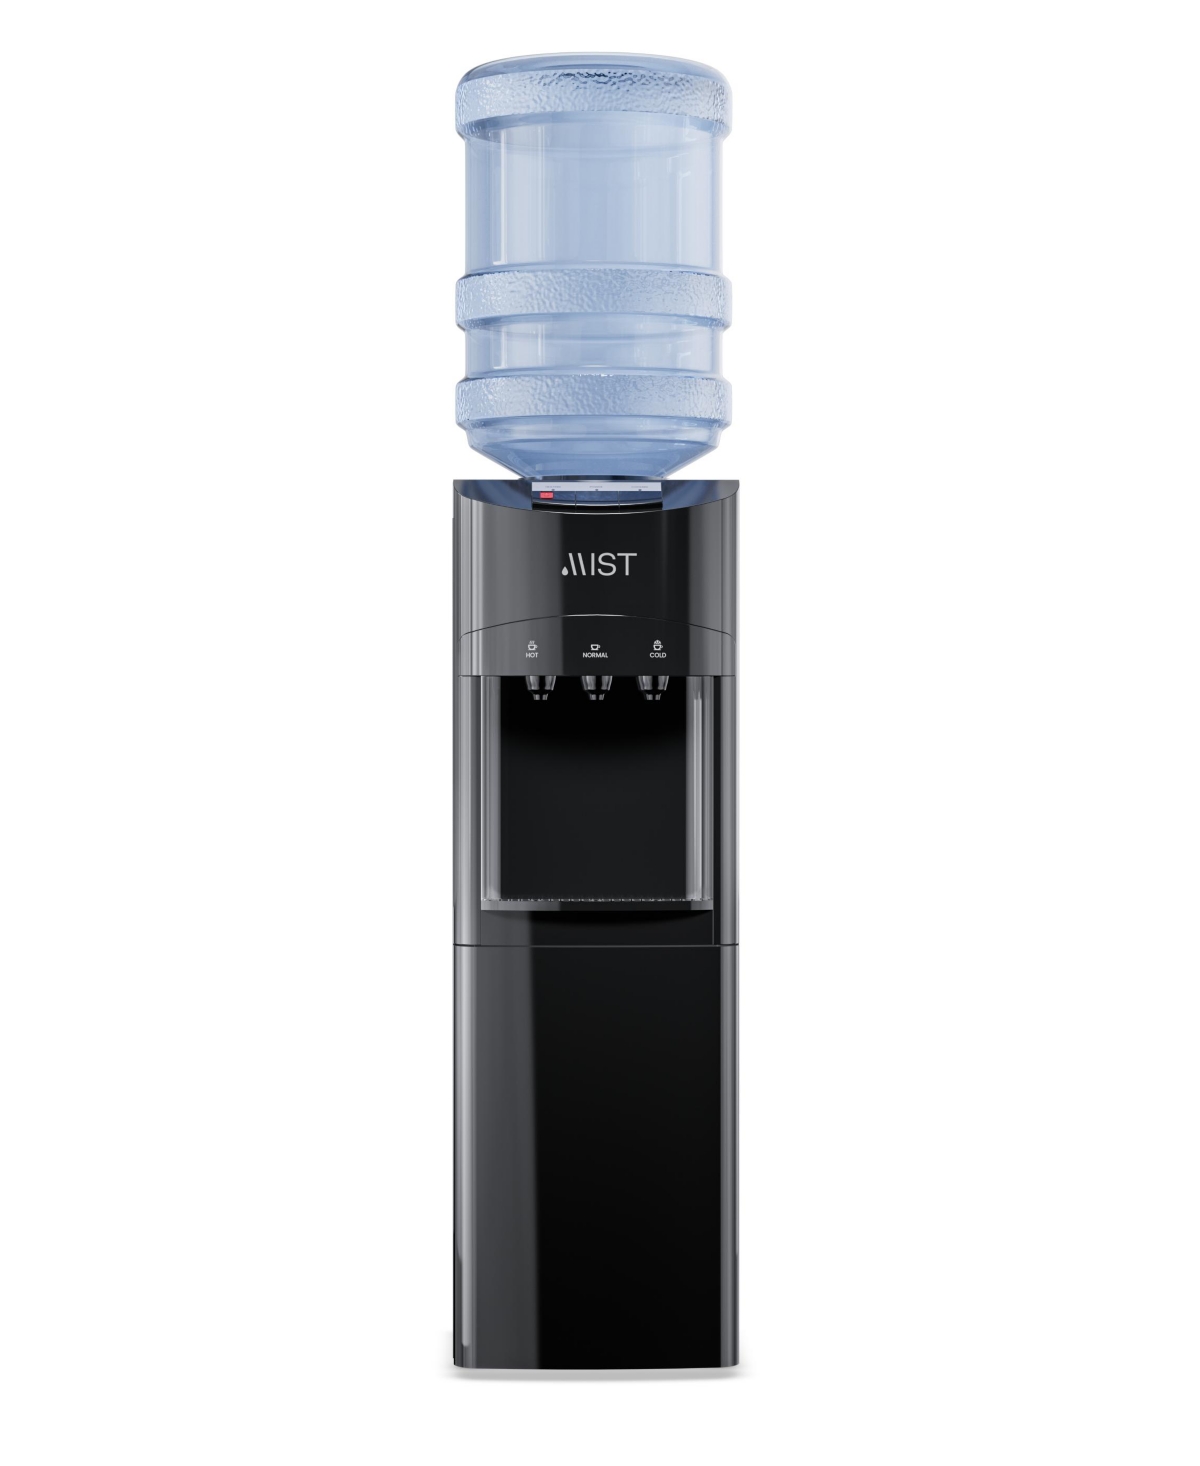 Top Loading Water Dispenser, 3 Temp, Holds 3 or 5 Gallon Bottles, Child Safety Lock - White